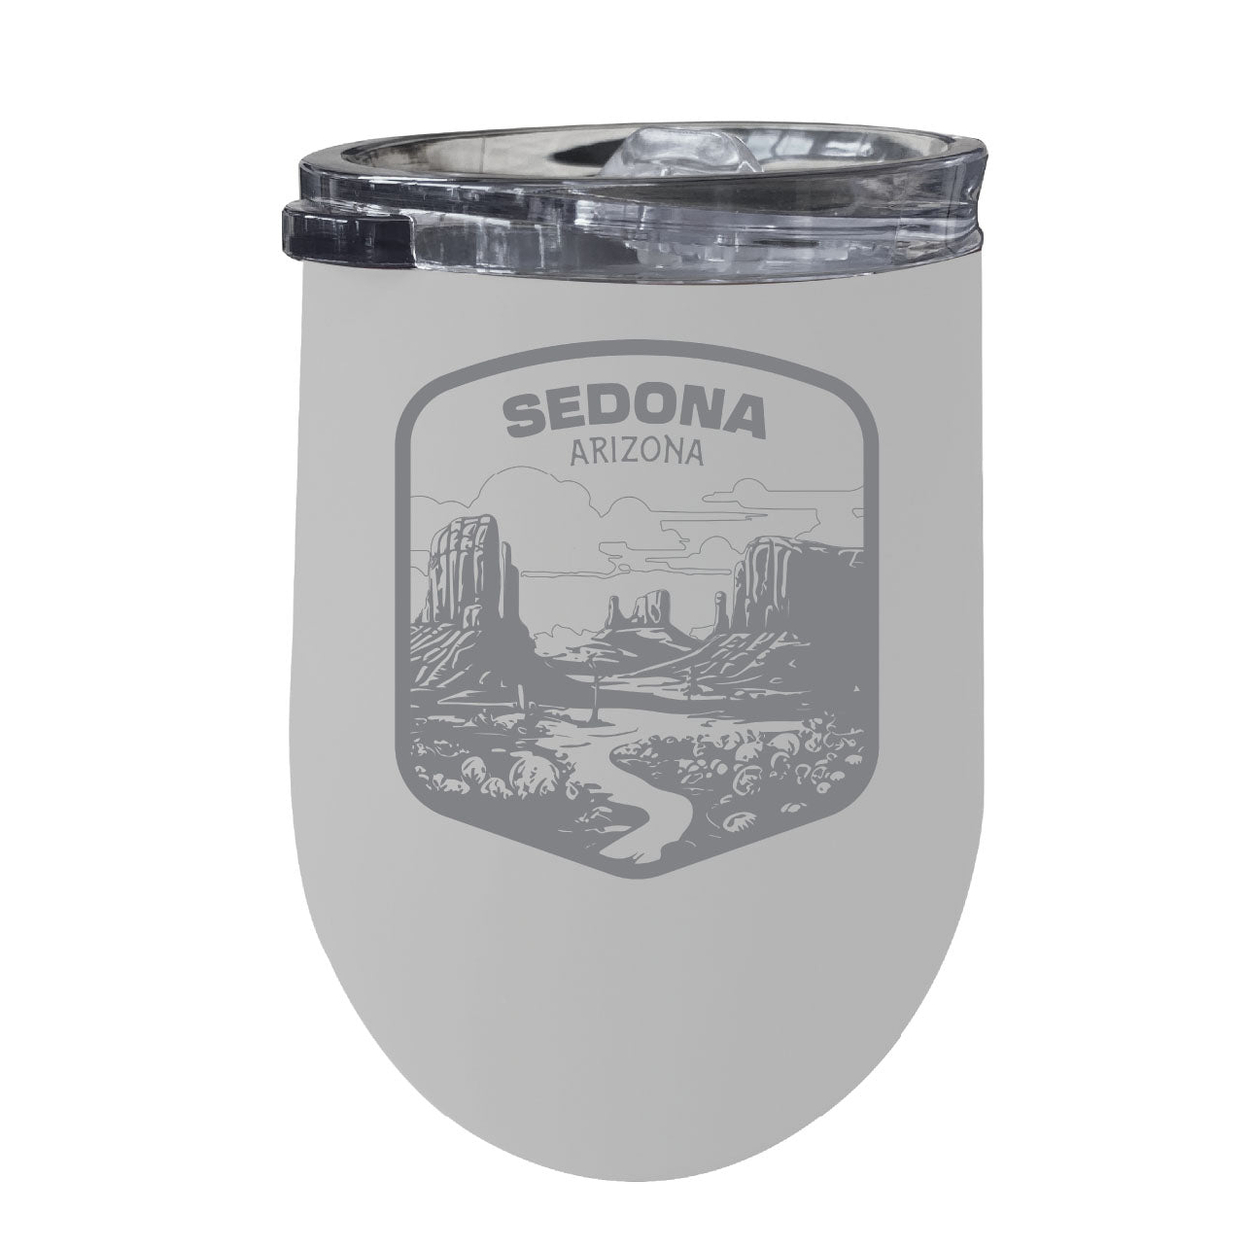 Sedona Arizona Souvenir 12 Oz Engraved Insulated Wine Stainless Steel Tumbler - Purple,,Single Unit